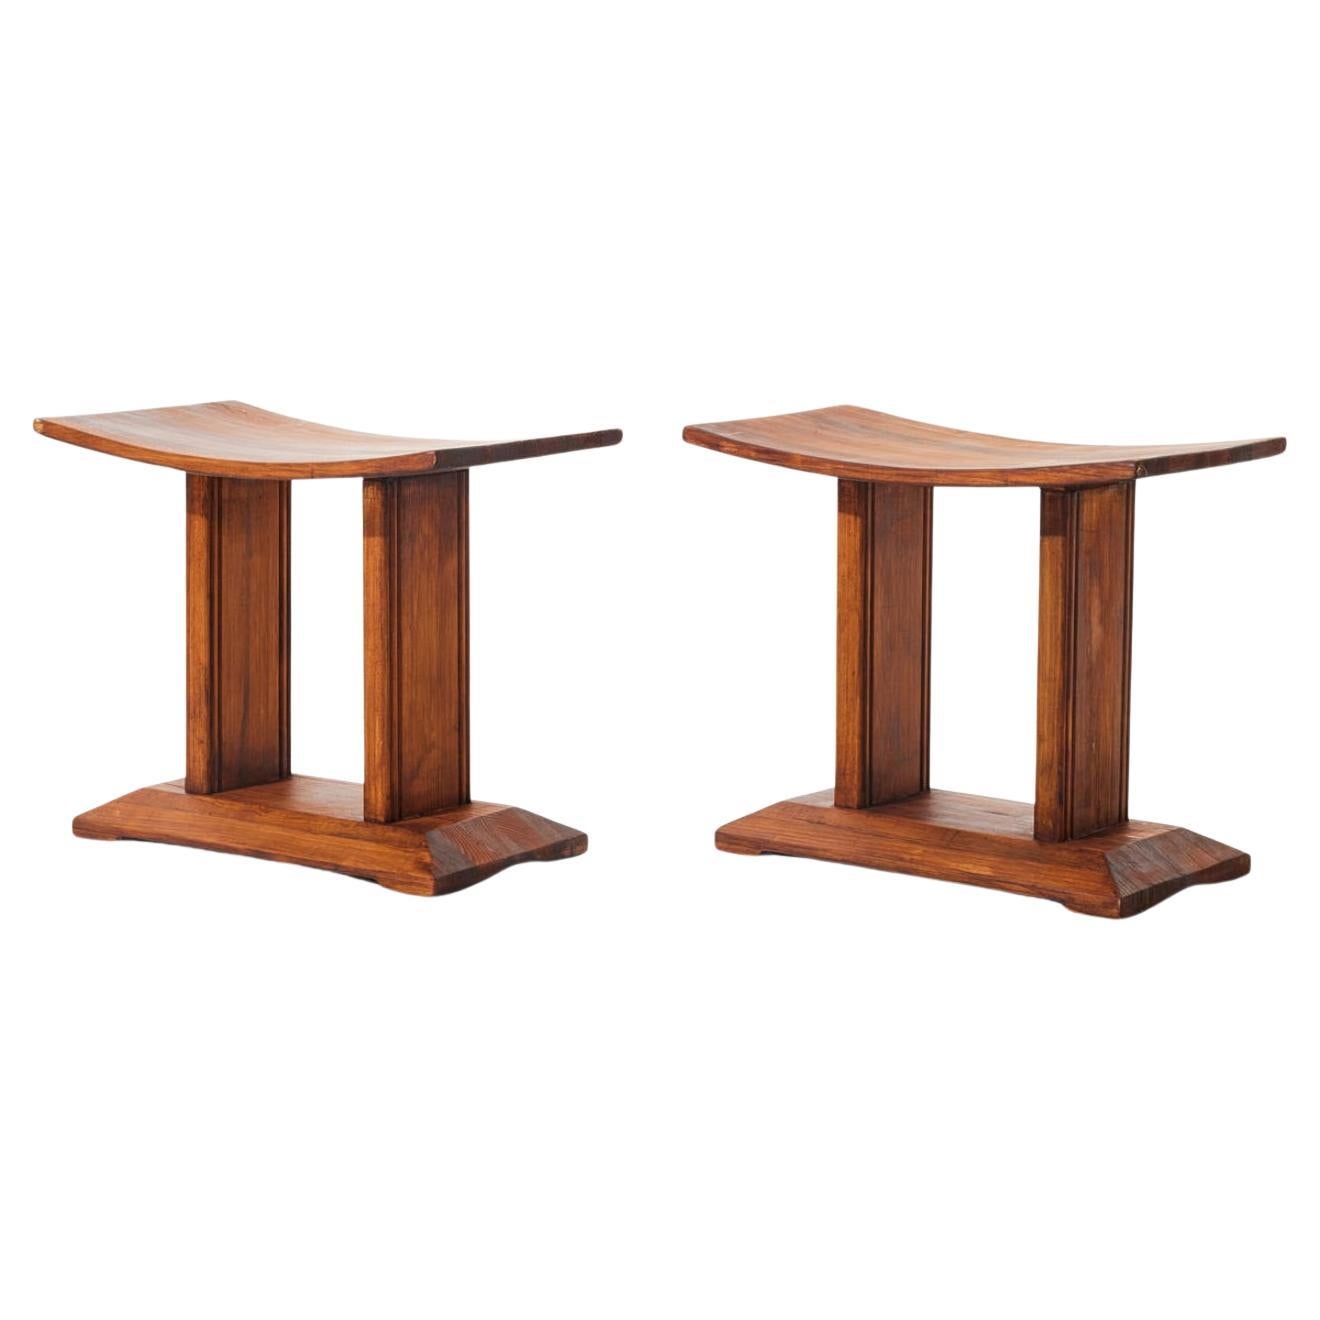 A pair of Swedish pine stools